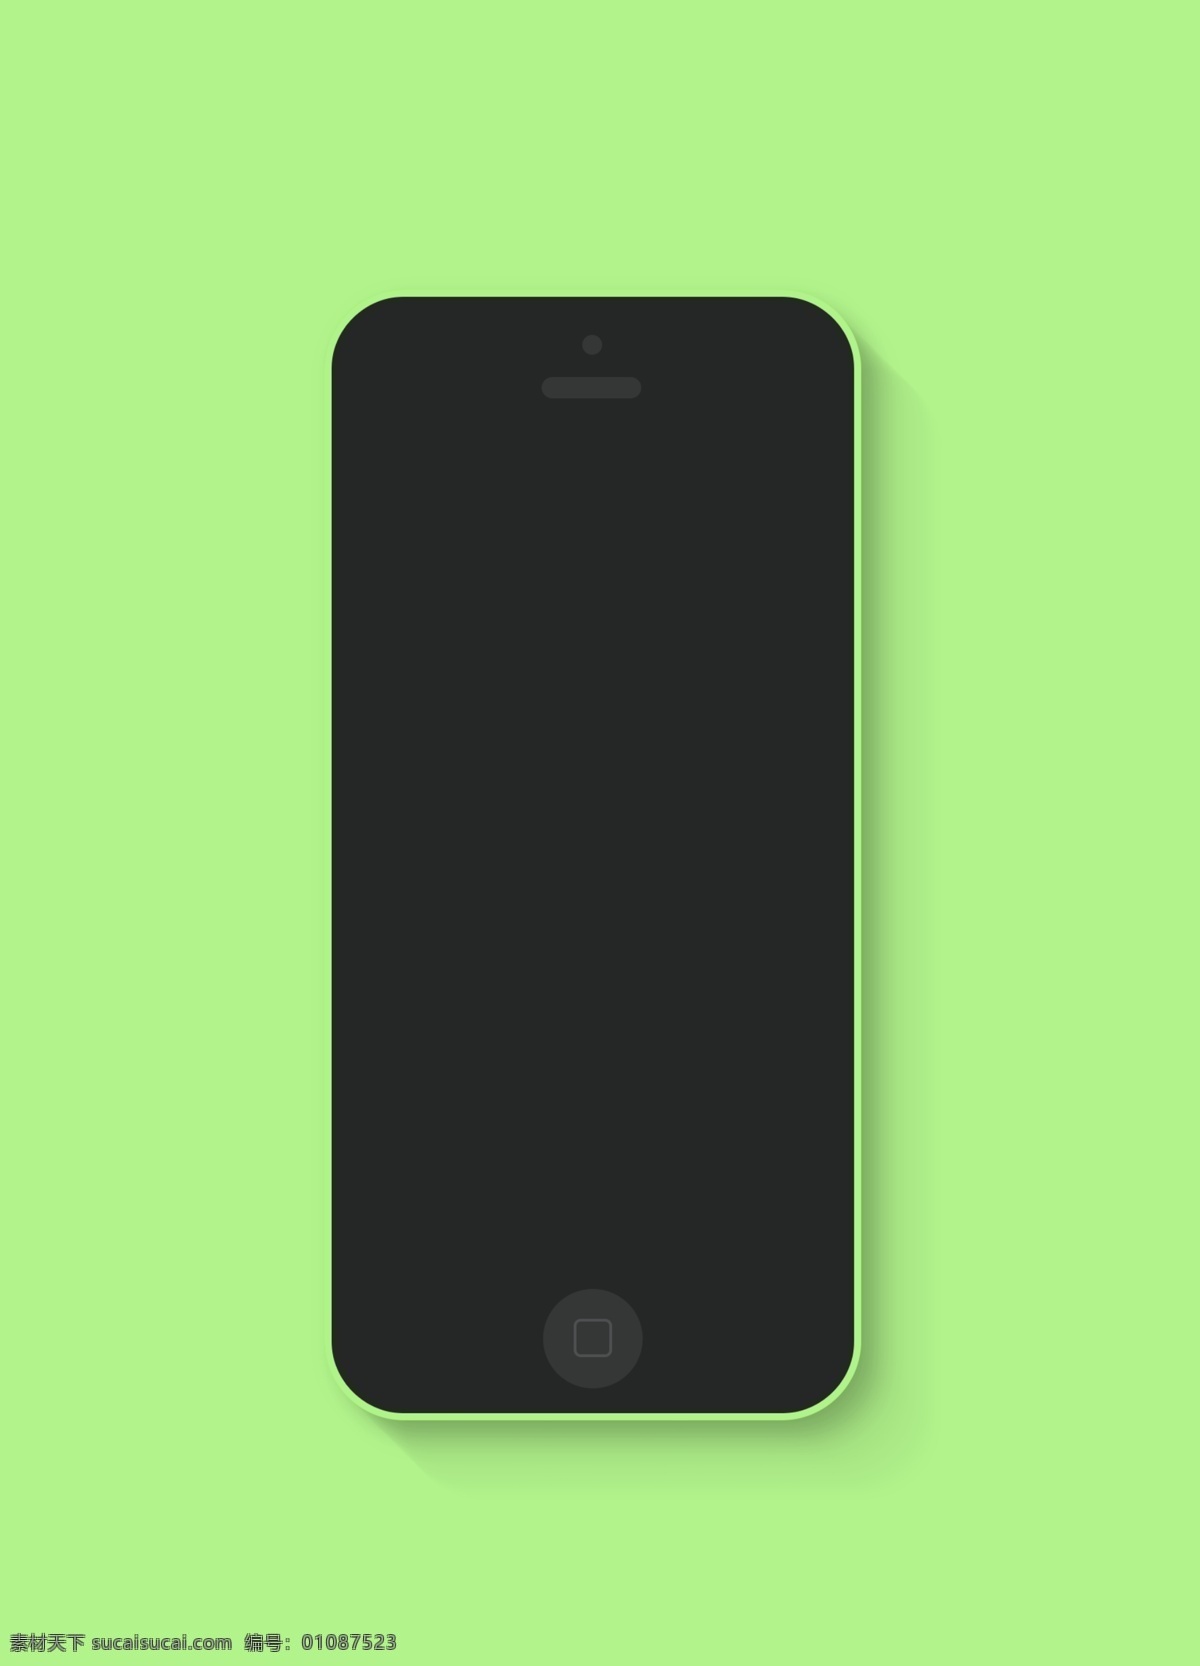 iphone5c 扁平化 苹果 手机 ios7 设备 客户端界面 移动界面设计 绿色